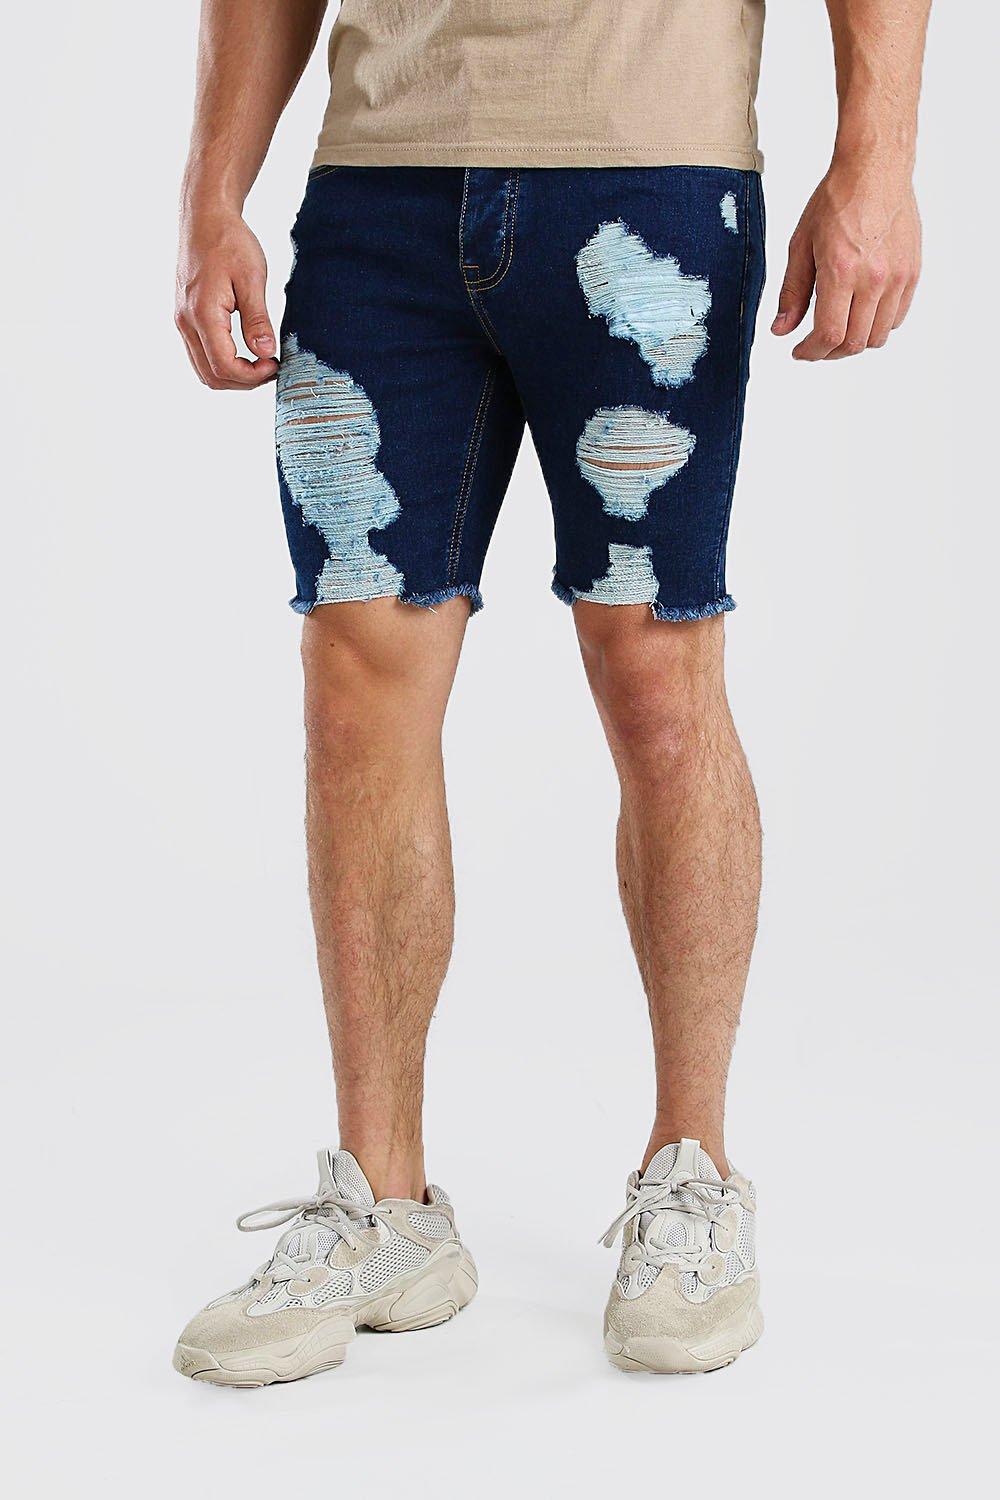 distressed jean shorts